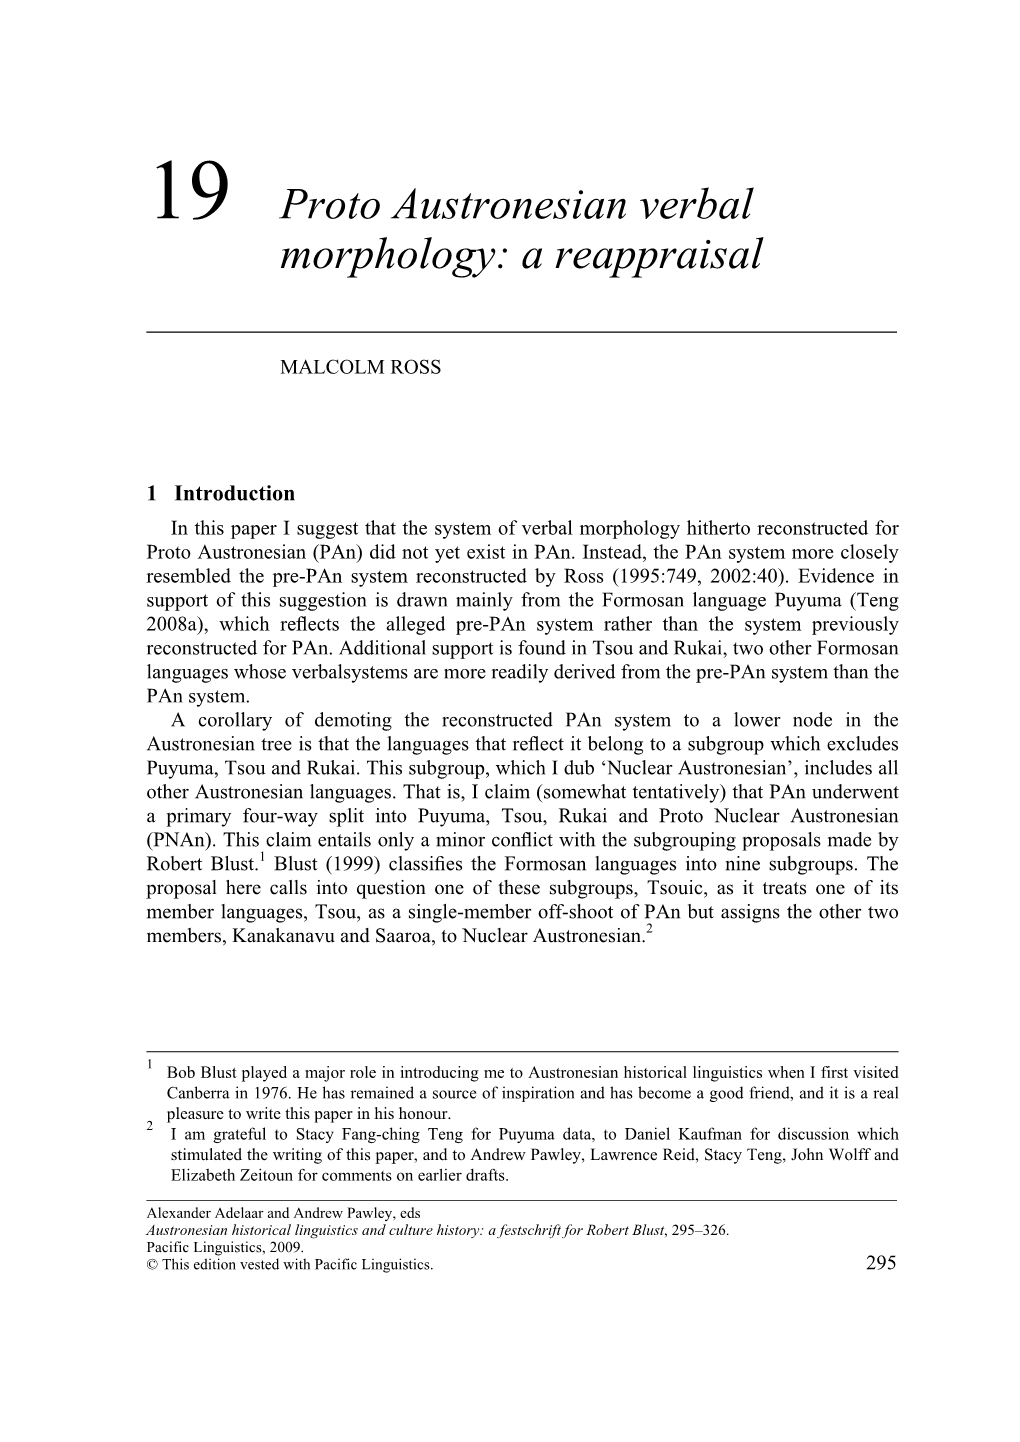 19 Proto Austronesian Verbal Morphology: a Reappraisal